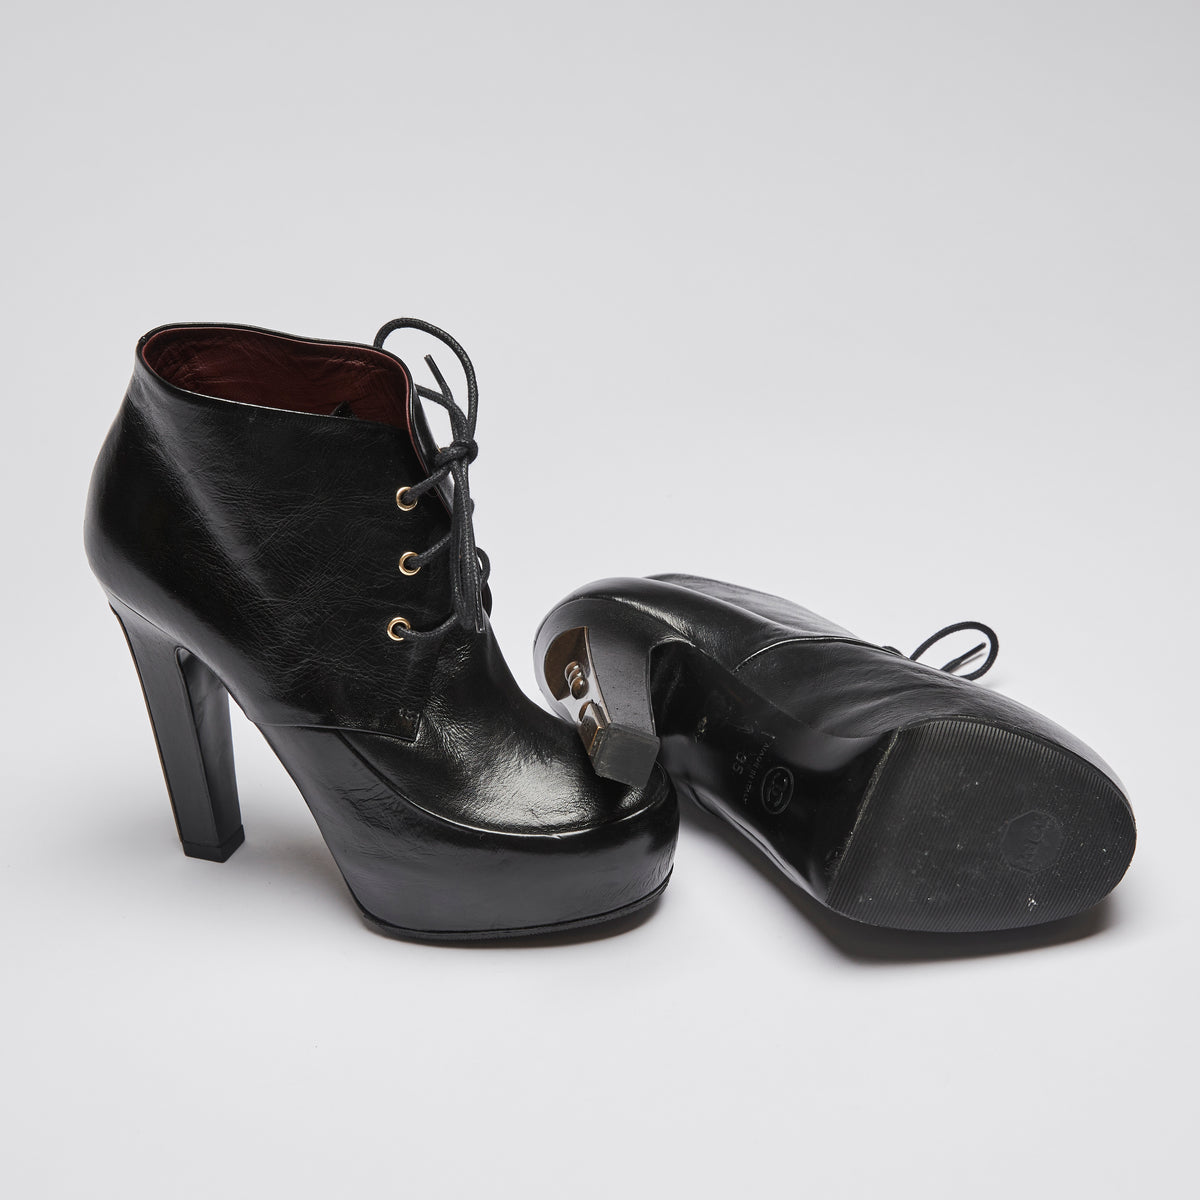 Pre-Loved Black Leather Lace Up Platform High Heel Boots.(bottom)